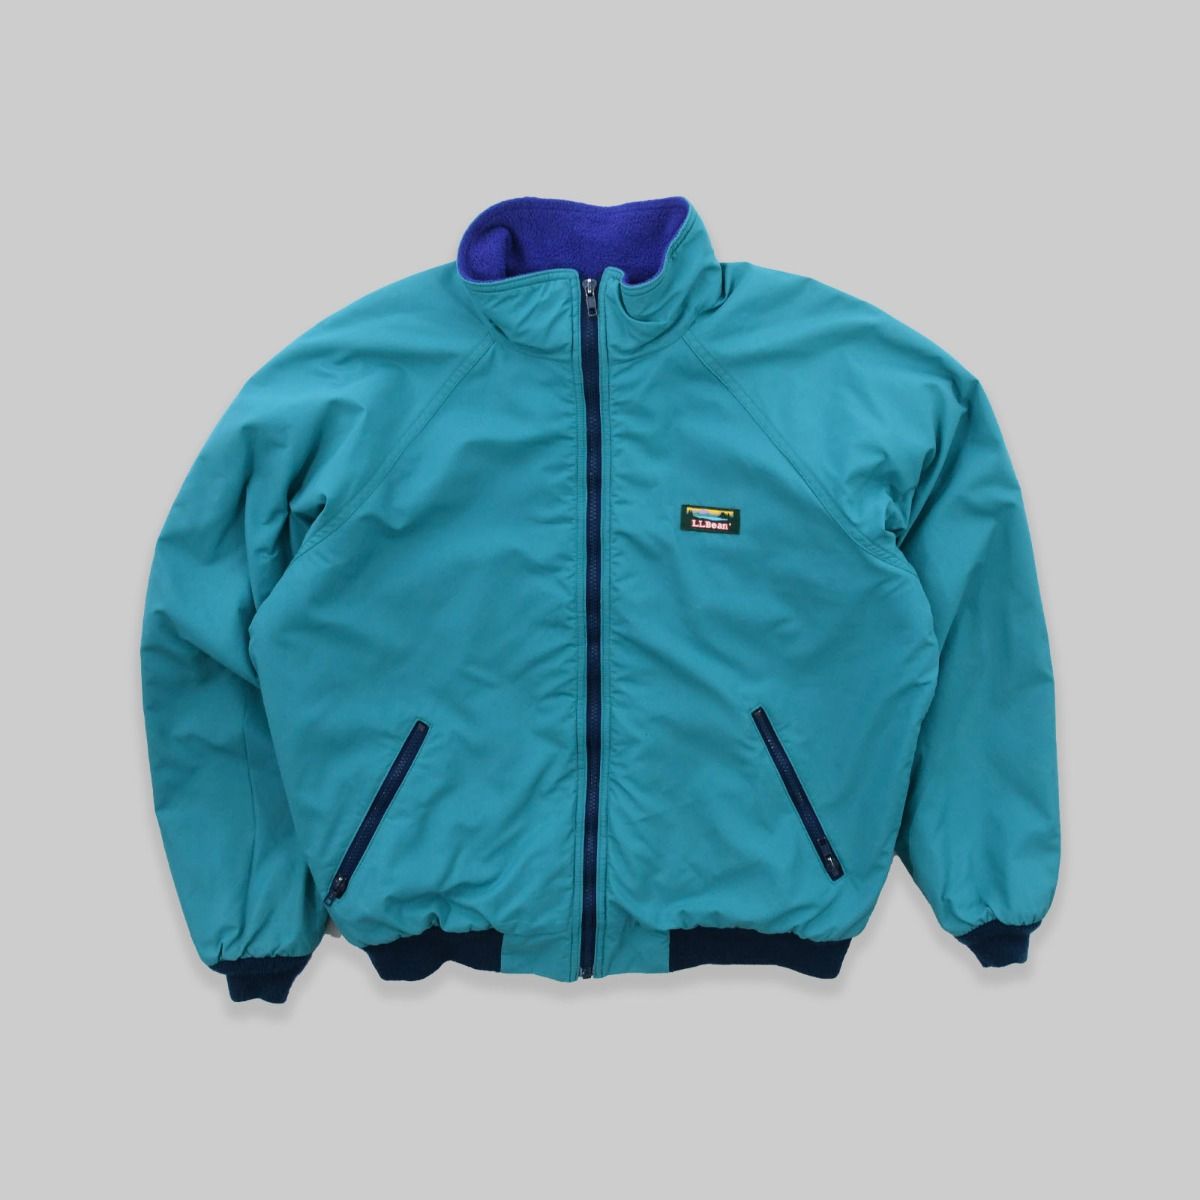 LL Bean 1990s Fleece Lined Jacket